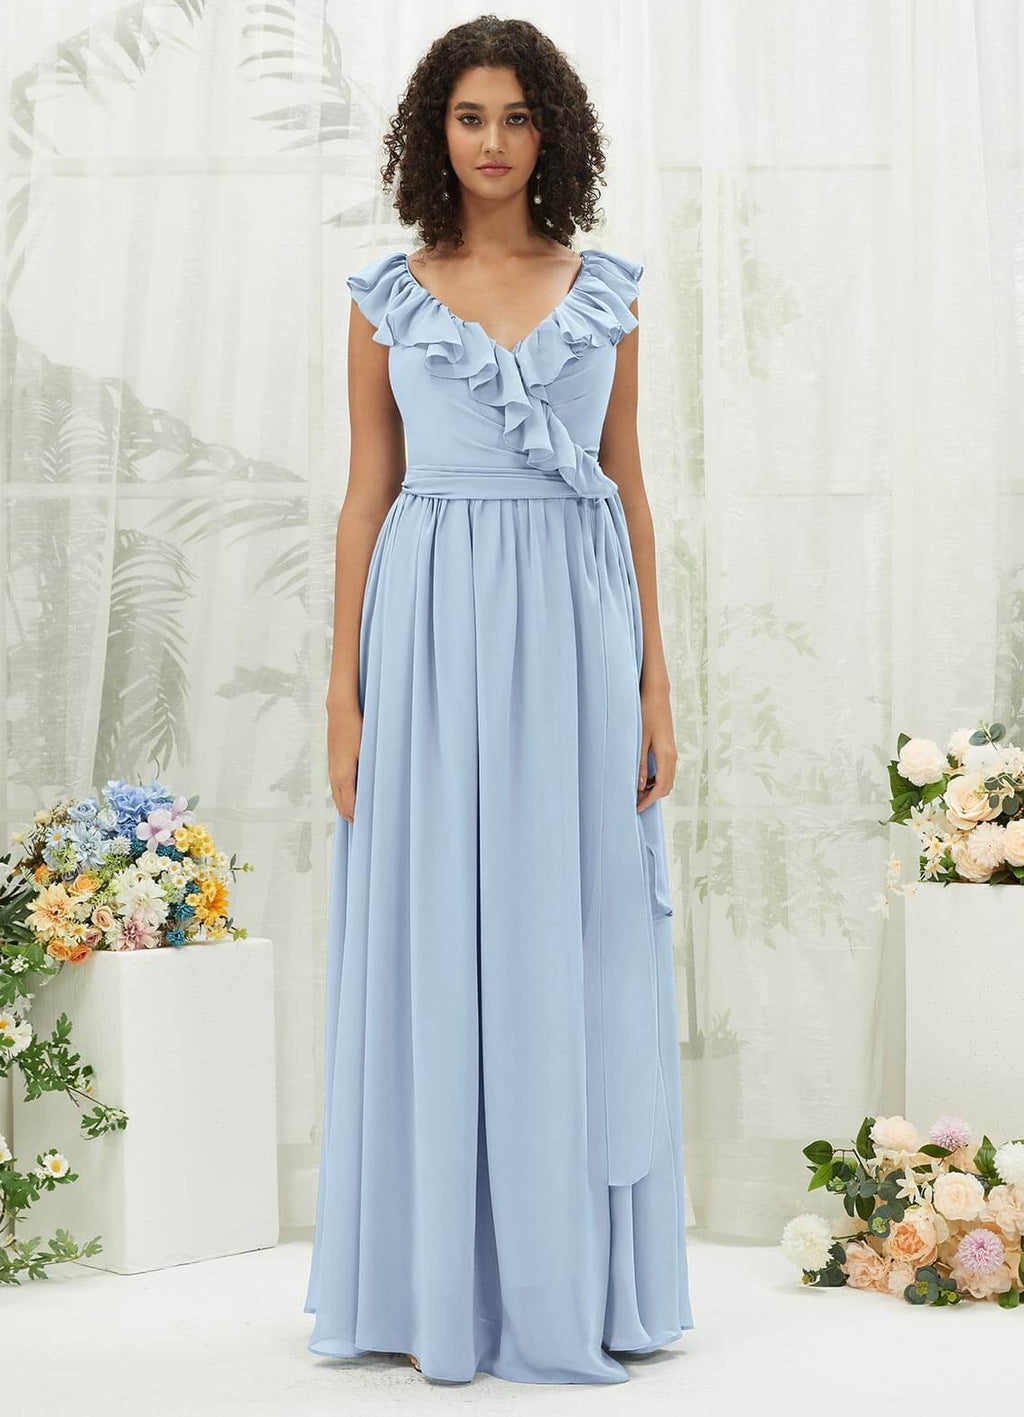  NZ Bridal Cornflower Blue Ruffle V Neck Chiffon Bridesmaid Dress R3702 Valerie a